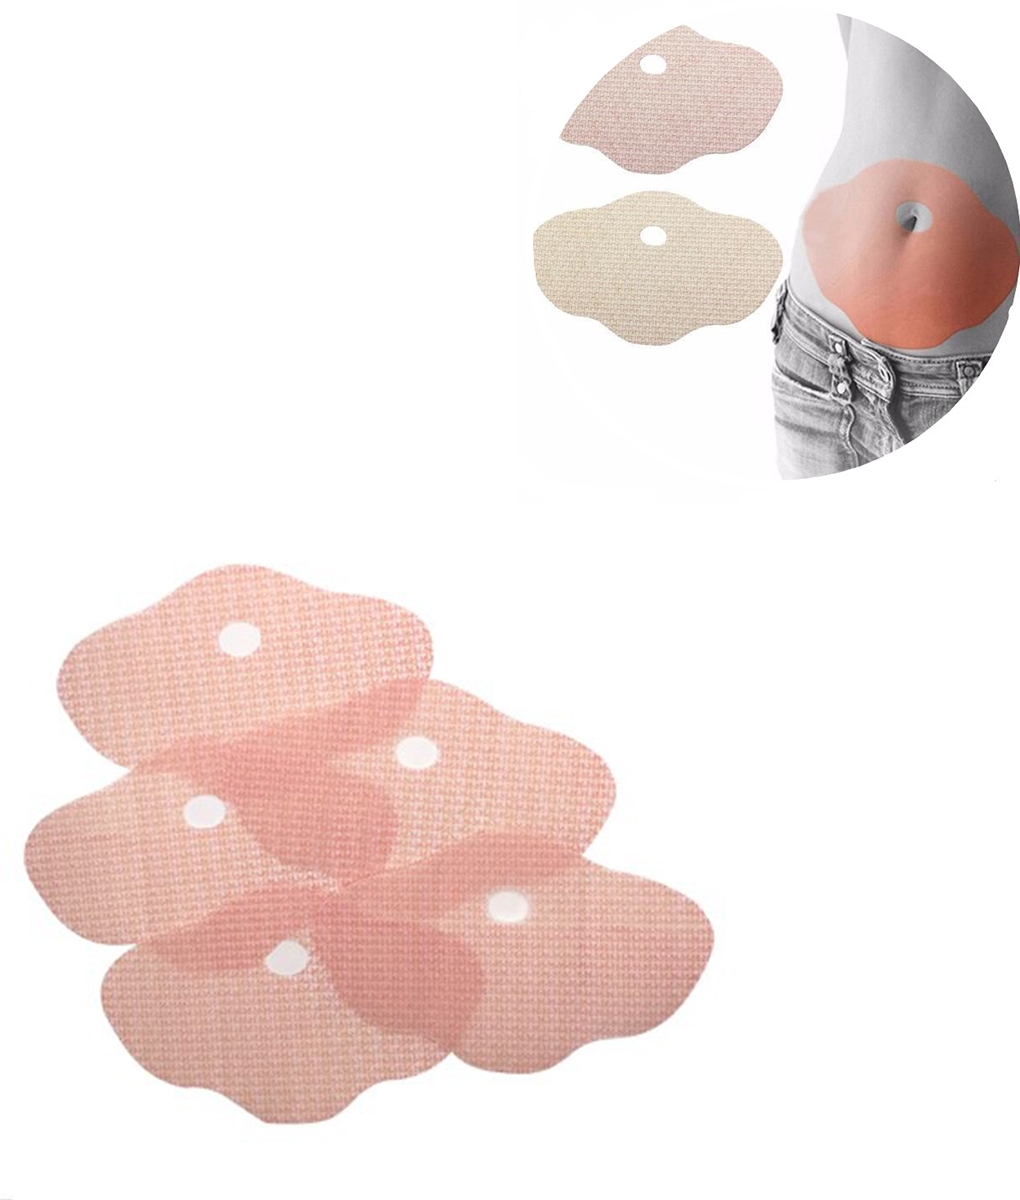 Fadopharm Redux Perfect Body Patch για Αδυνάτισμα Κοιλιάς